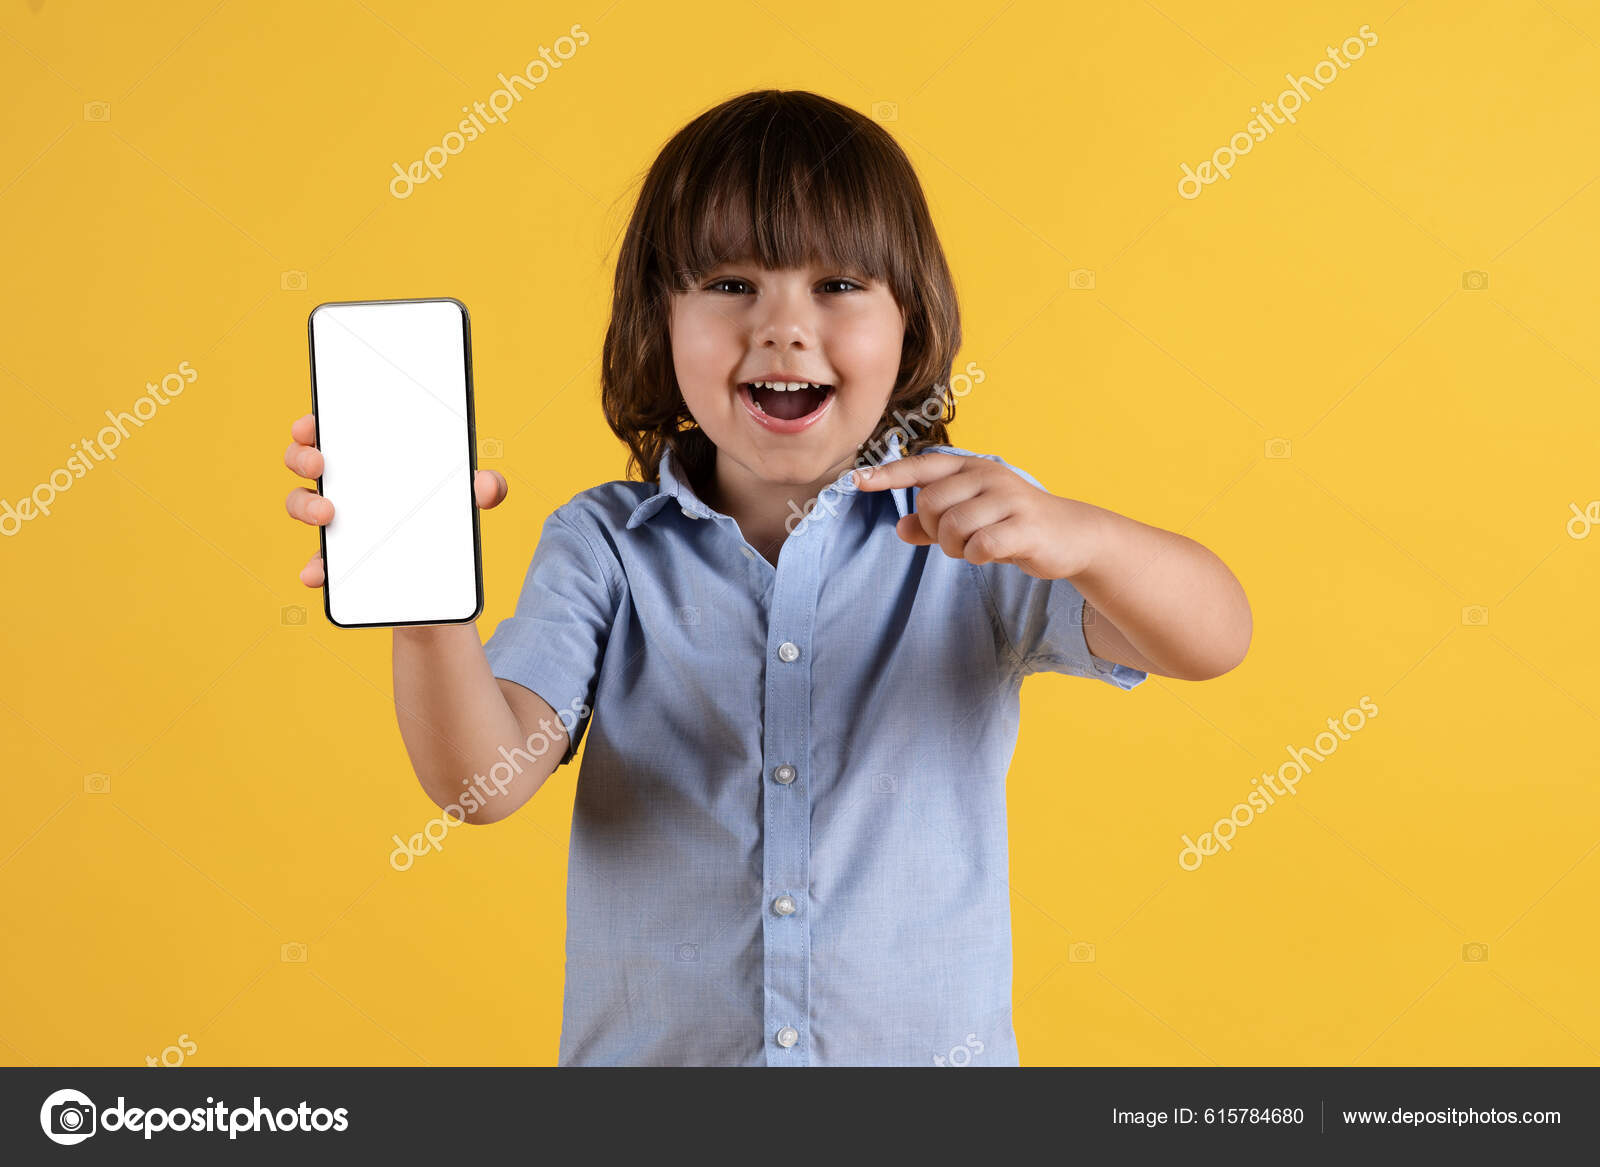 https://st.depositphotos.com/4218696/61578/i/1600/depositphotos_615784680-stock-photo-kids-gadgets-happy-excited-little.jpg